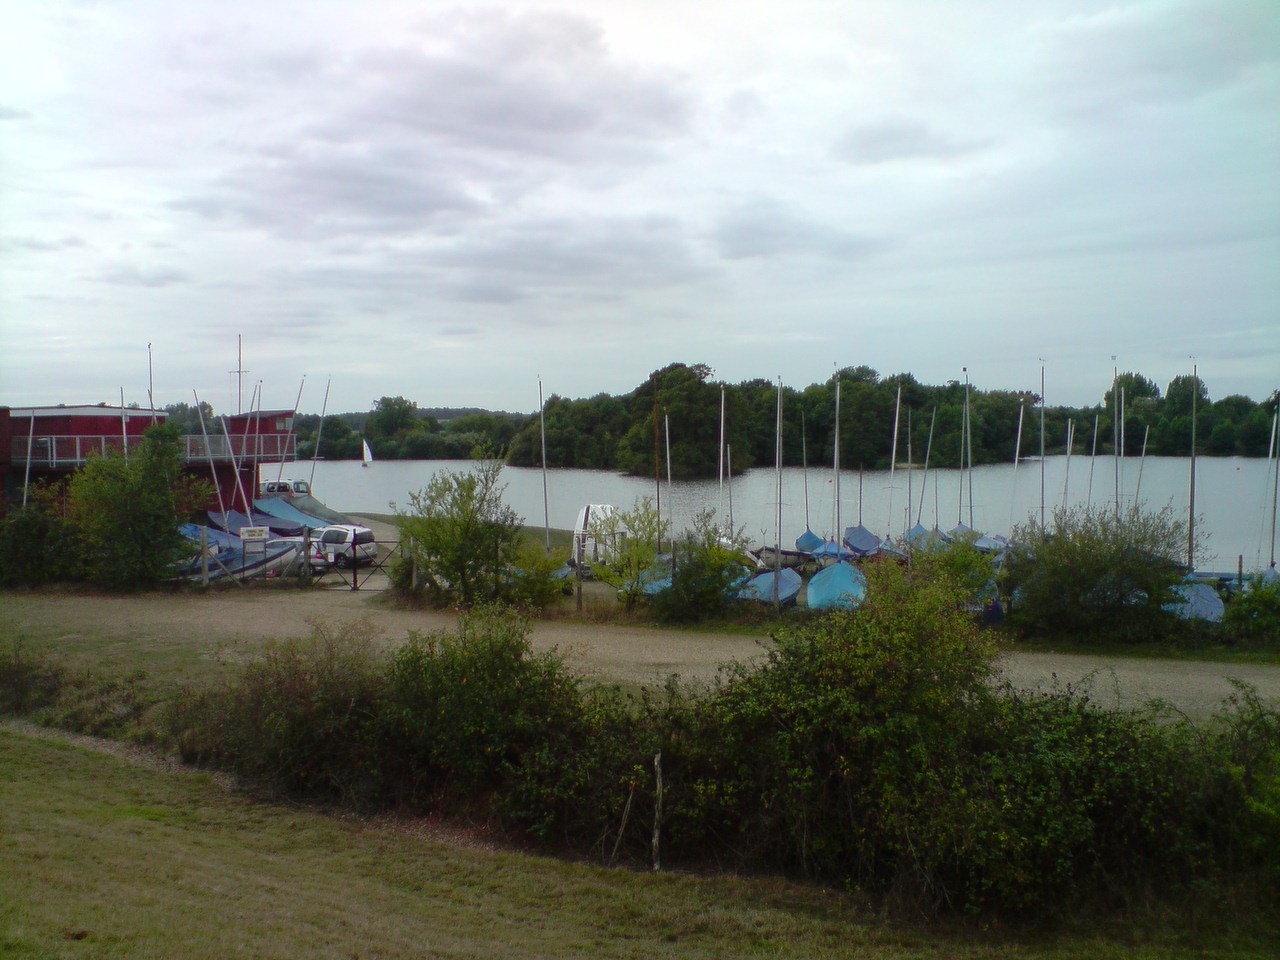 Club house at Tonbridge Sailing Club